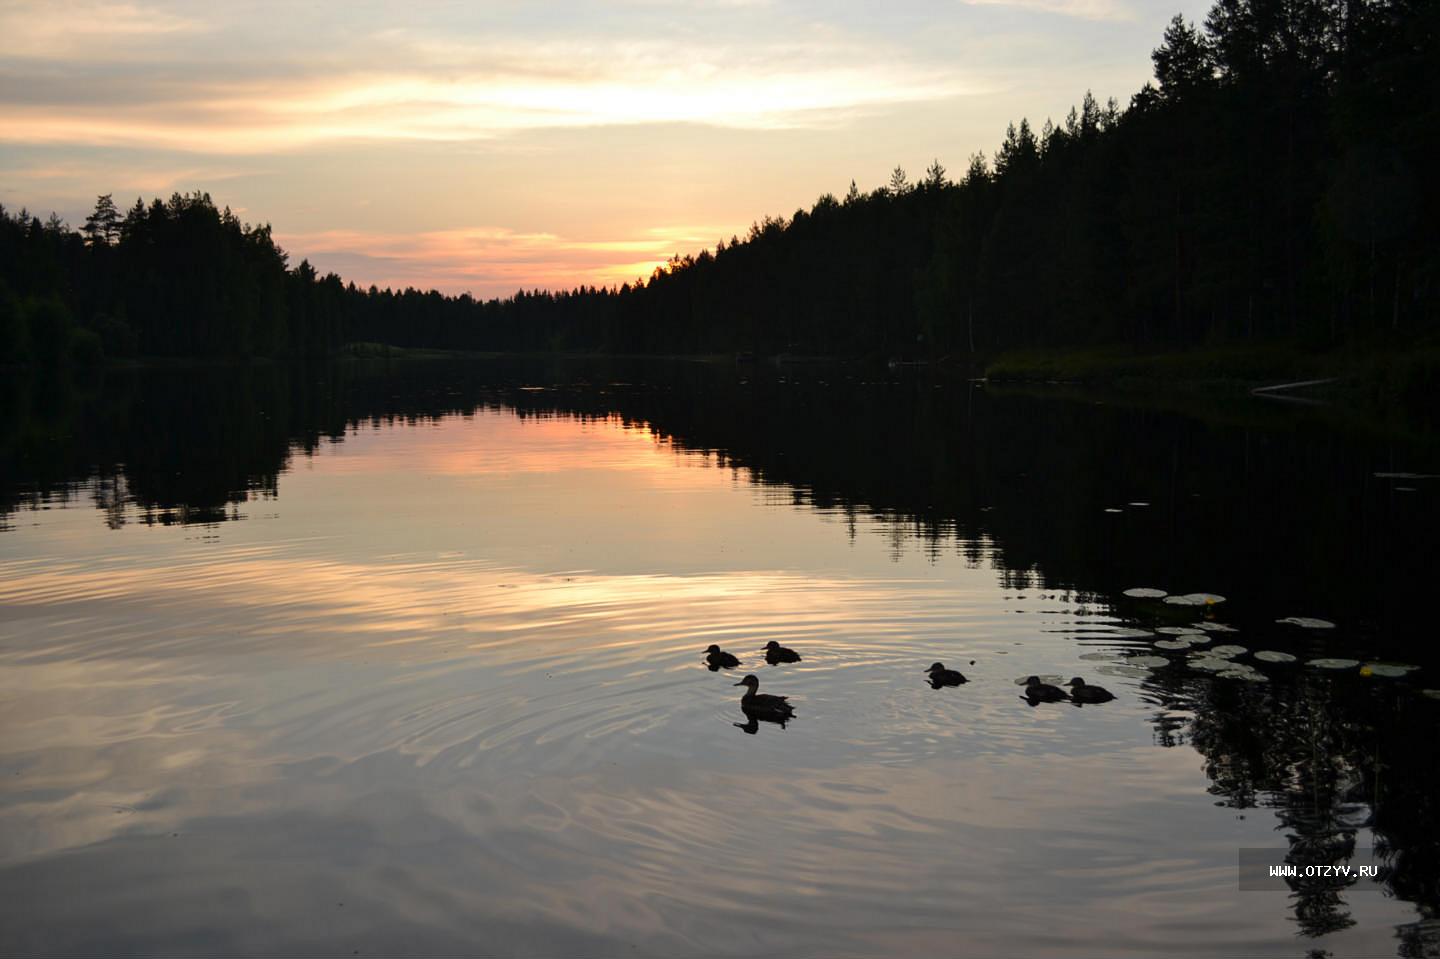 Финское озеро 5 букв. Финское озеро Парголово рыбалка. Финляндия озеро кулугу. Картинки финских озер.